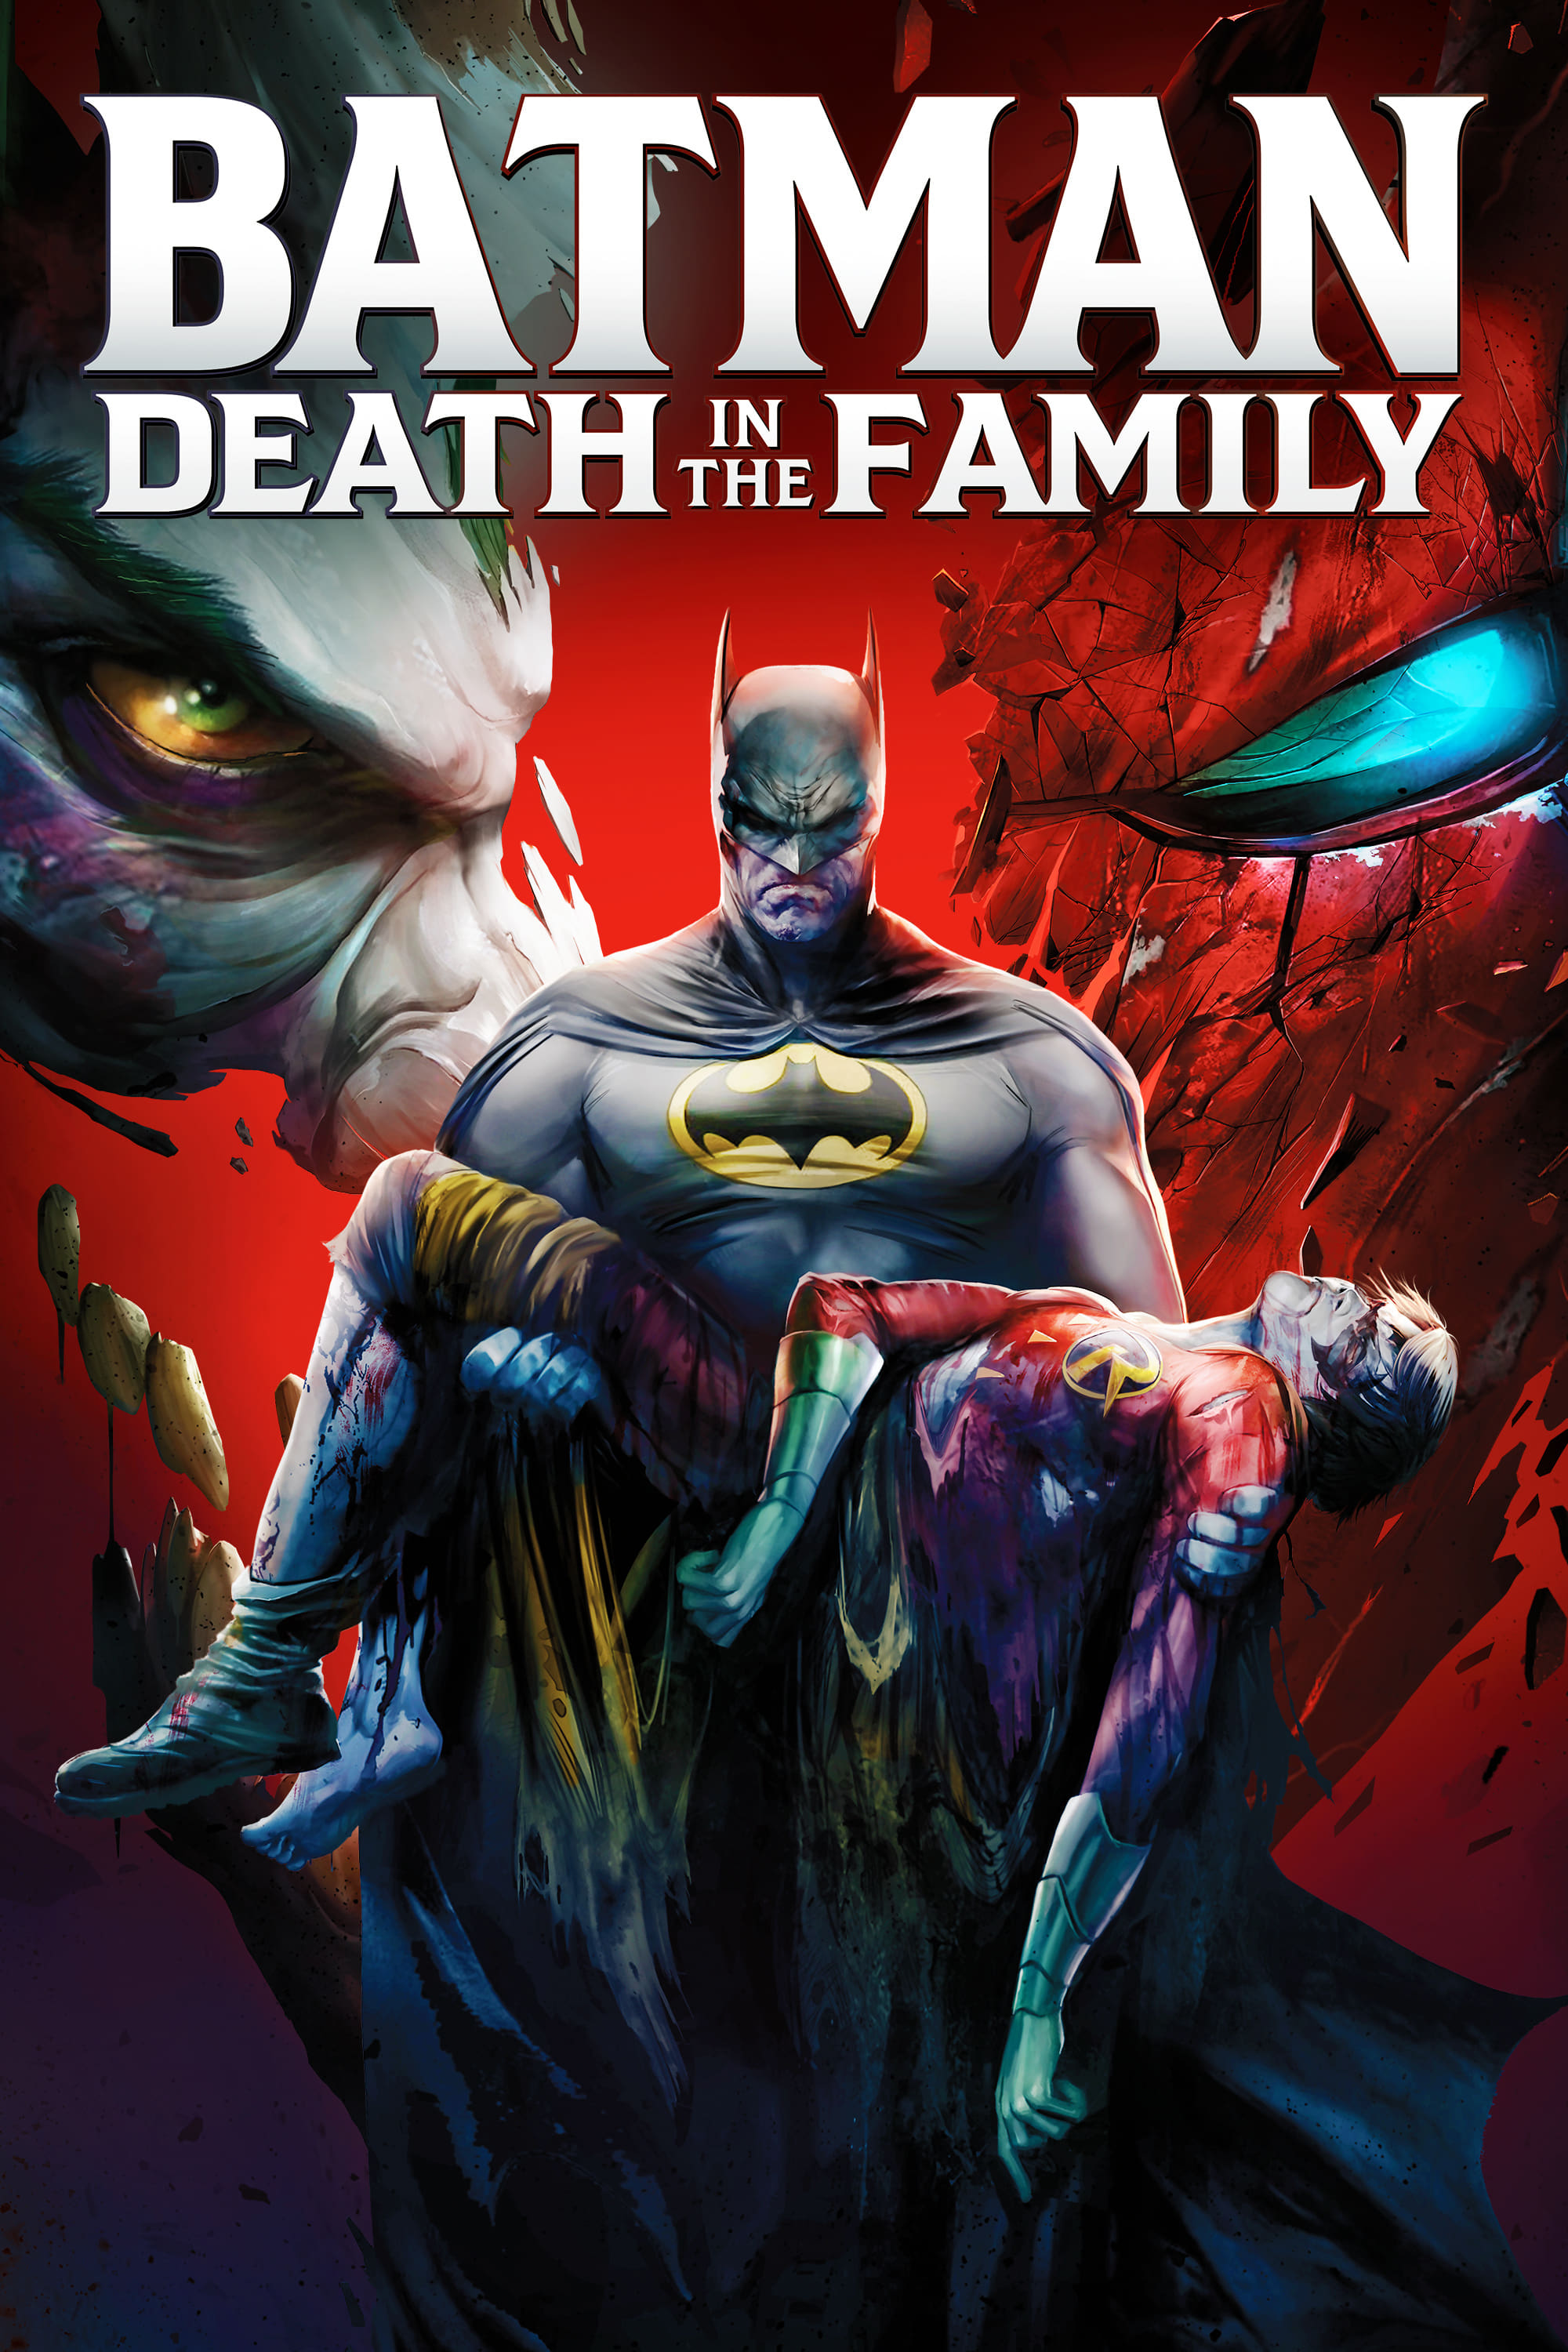 Batman: Death in the Family film